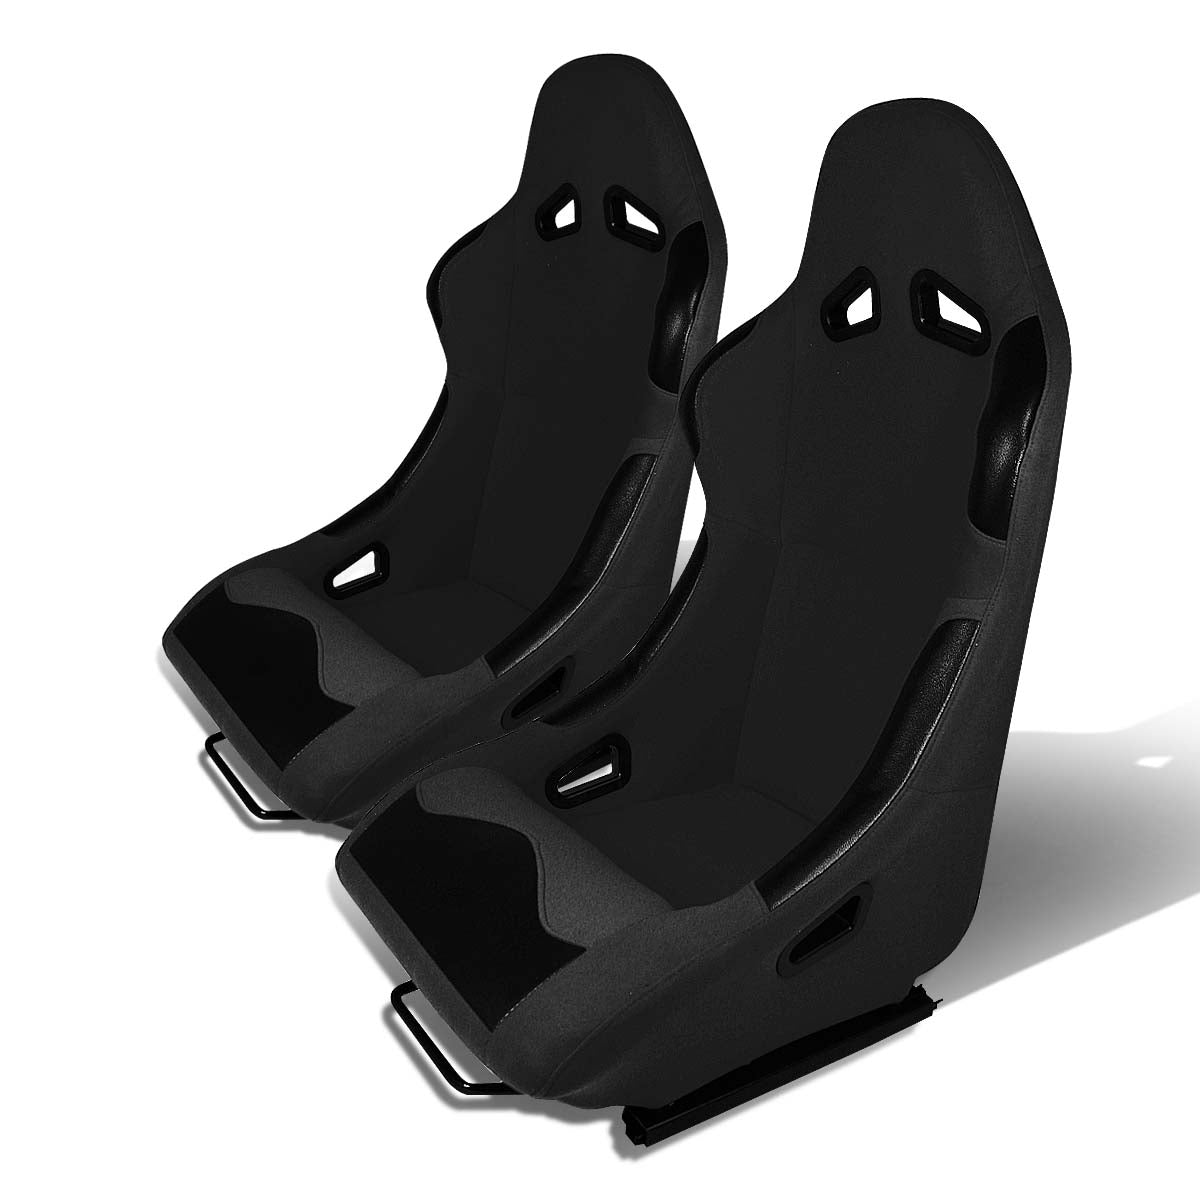 Racing Seats - PVC Leather - Pair